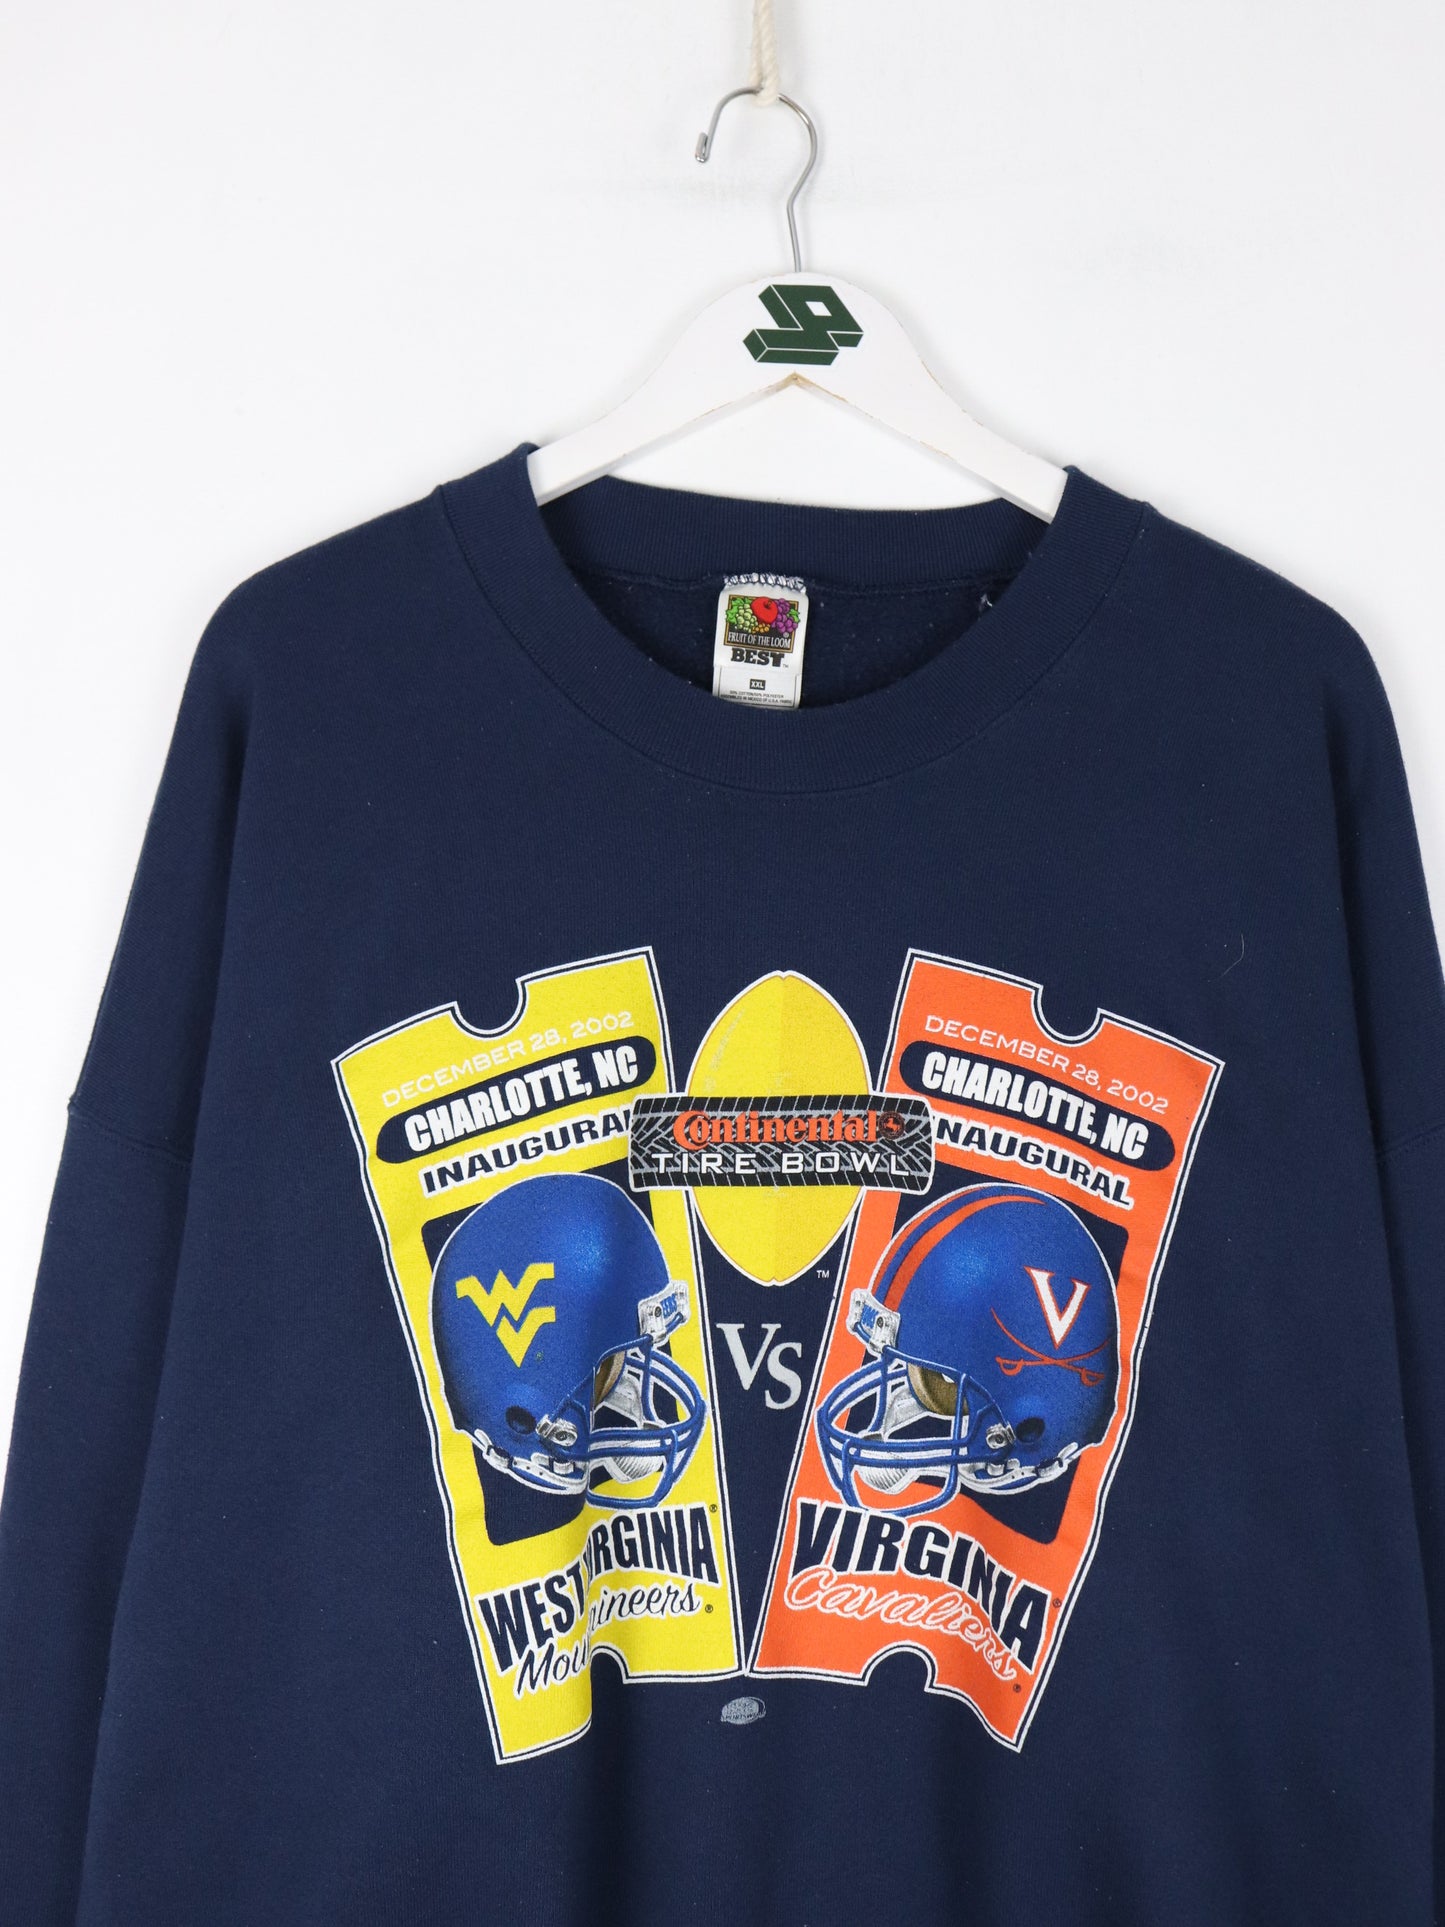 Vintage West Virginia Vs Virginia Sweatshirt Mens 2XL Blue College Football